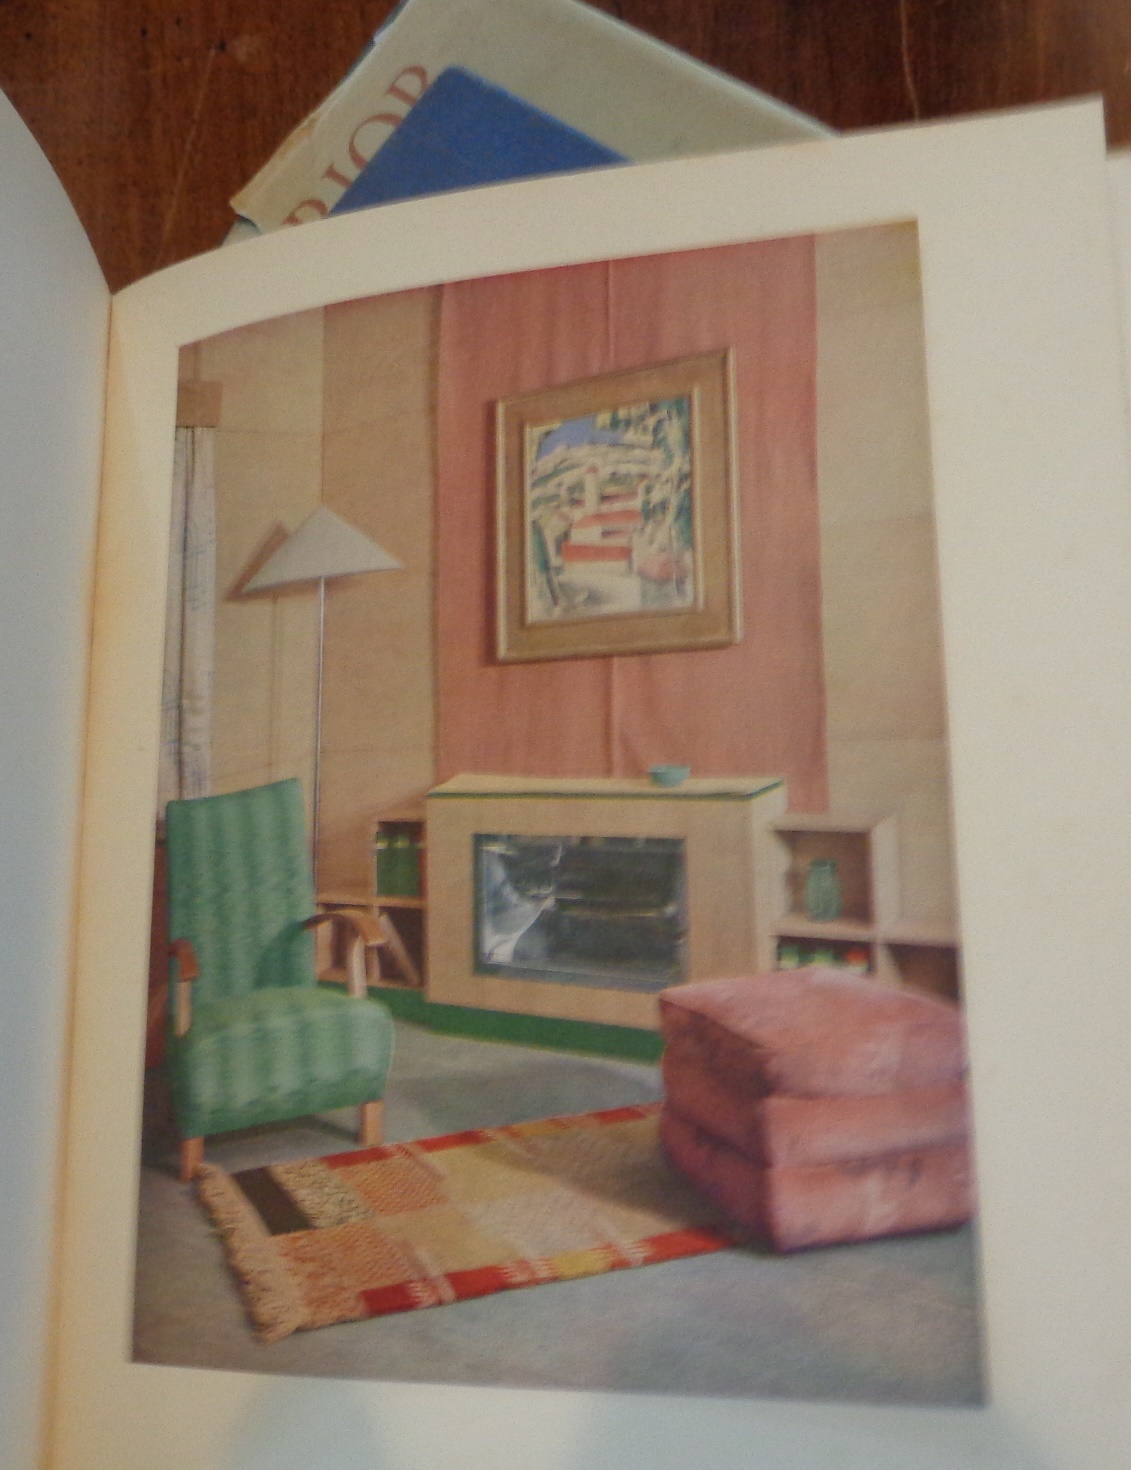 Two 1930's Interior Design books by Derek Patmore, Margaret Jourdan's "English Interior Decoration", - Image 4 of 5